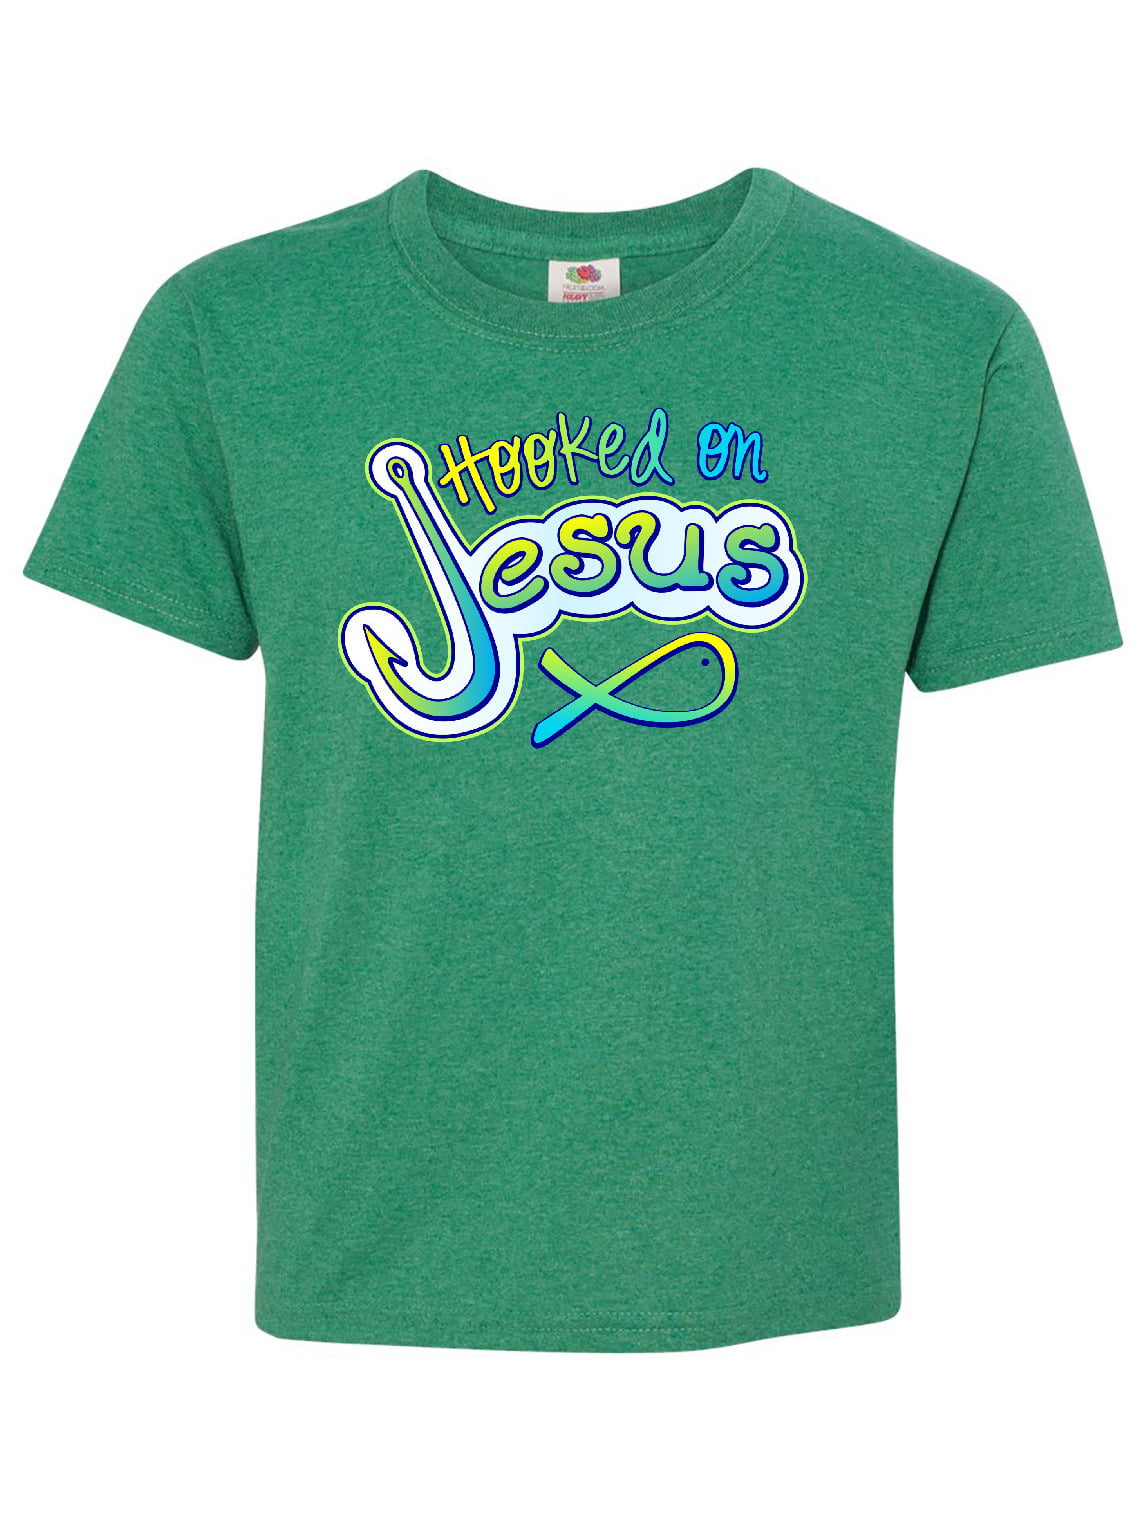 hooked on Jesus Christian Youth T-Shirt - Walmart.com - Walmart.com